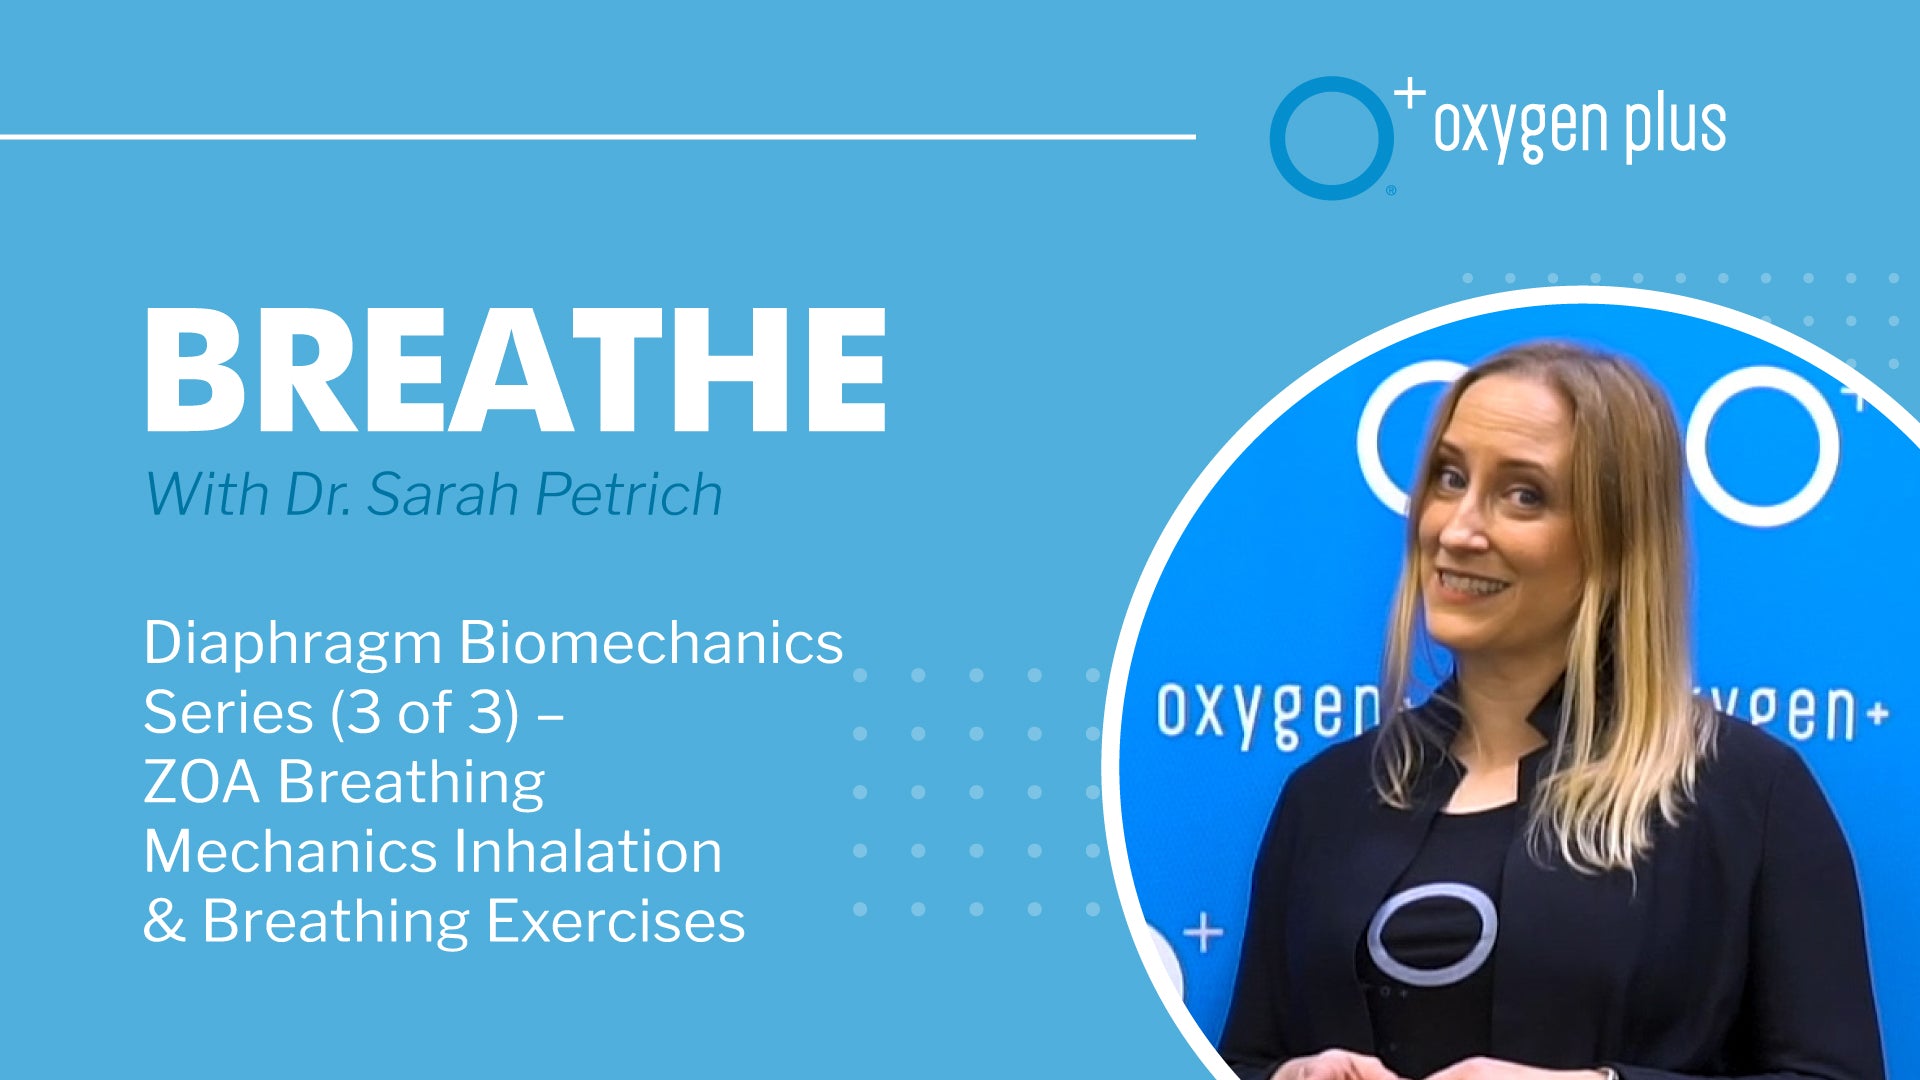 Diaphragm Biomechanics Series (3 of 3): “ZOA Breathing Mechanics Inhalation & Breathing Exercises” with Dr. Sarah Petrich